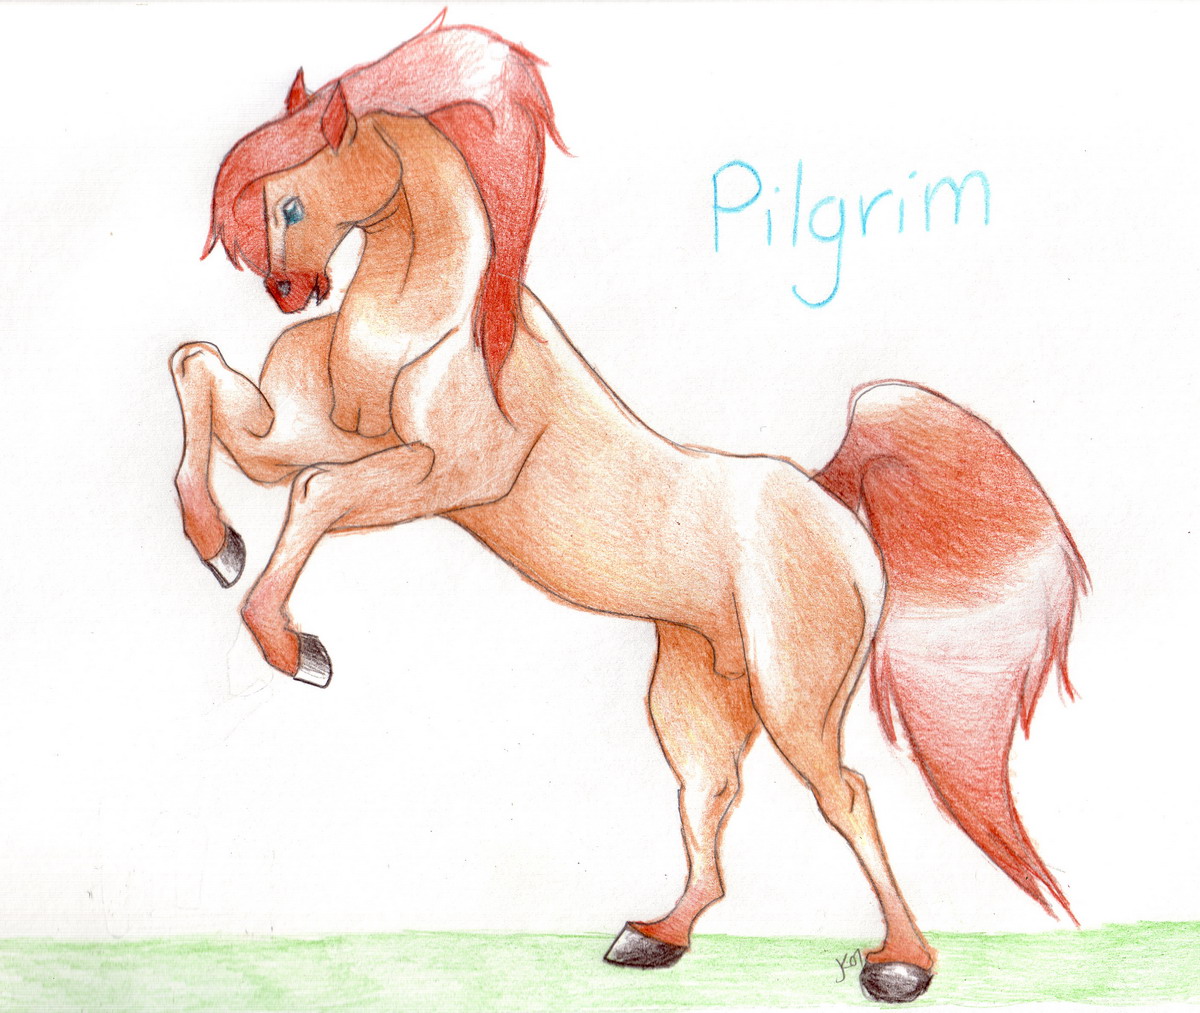 Pilgrim by HoRsEwIsPeReR396